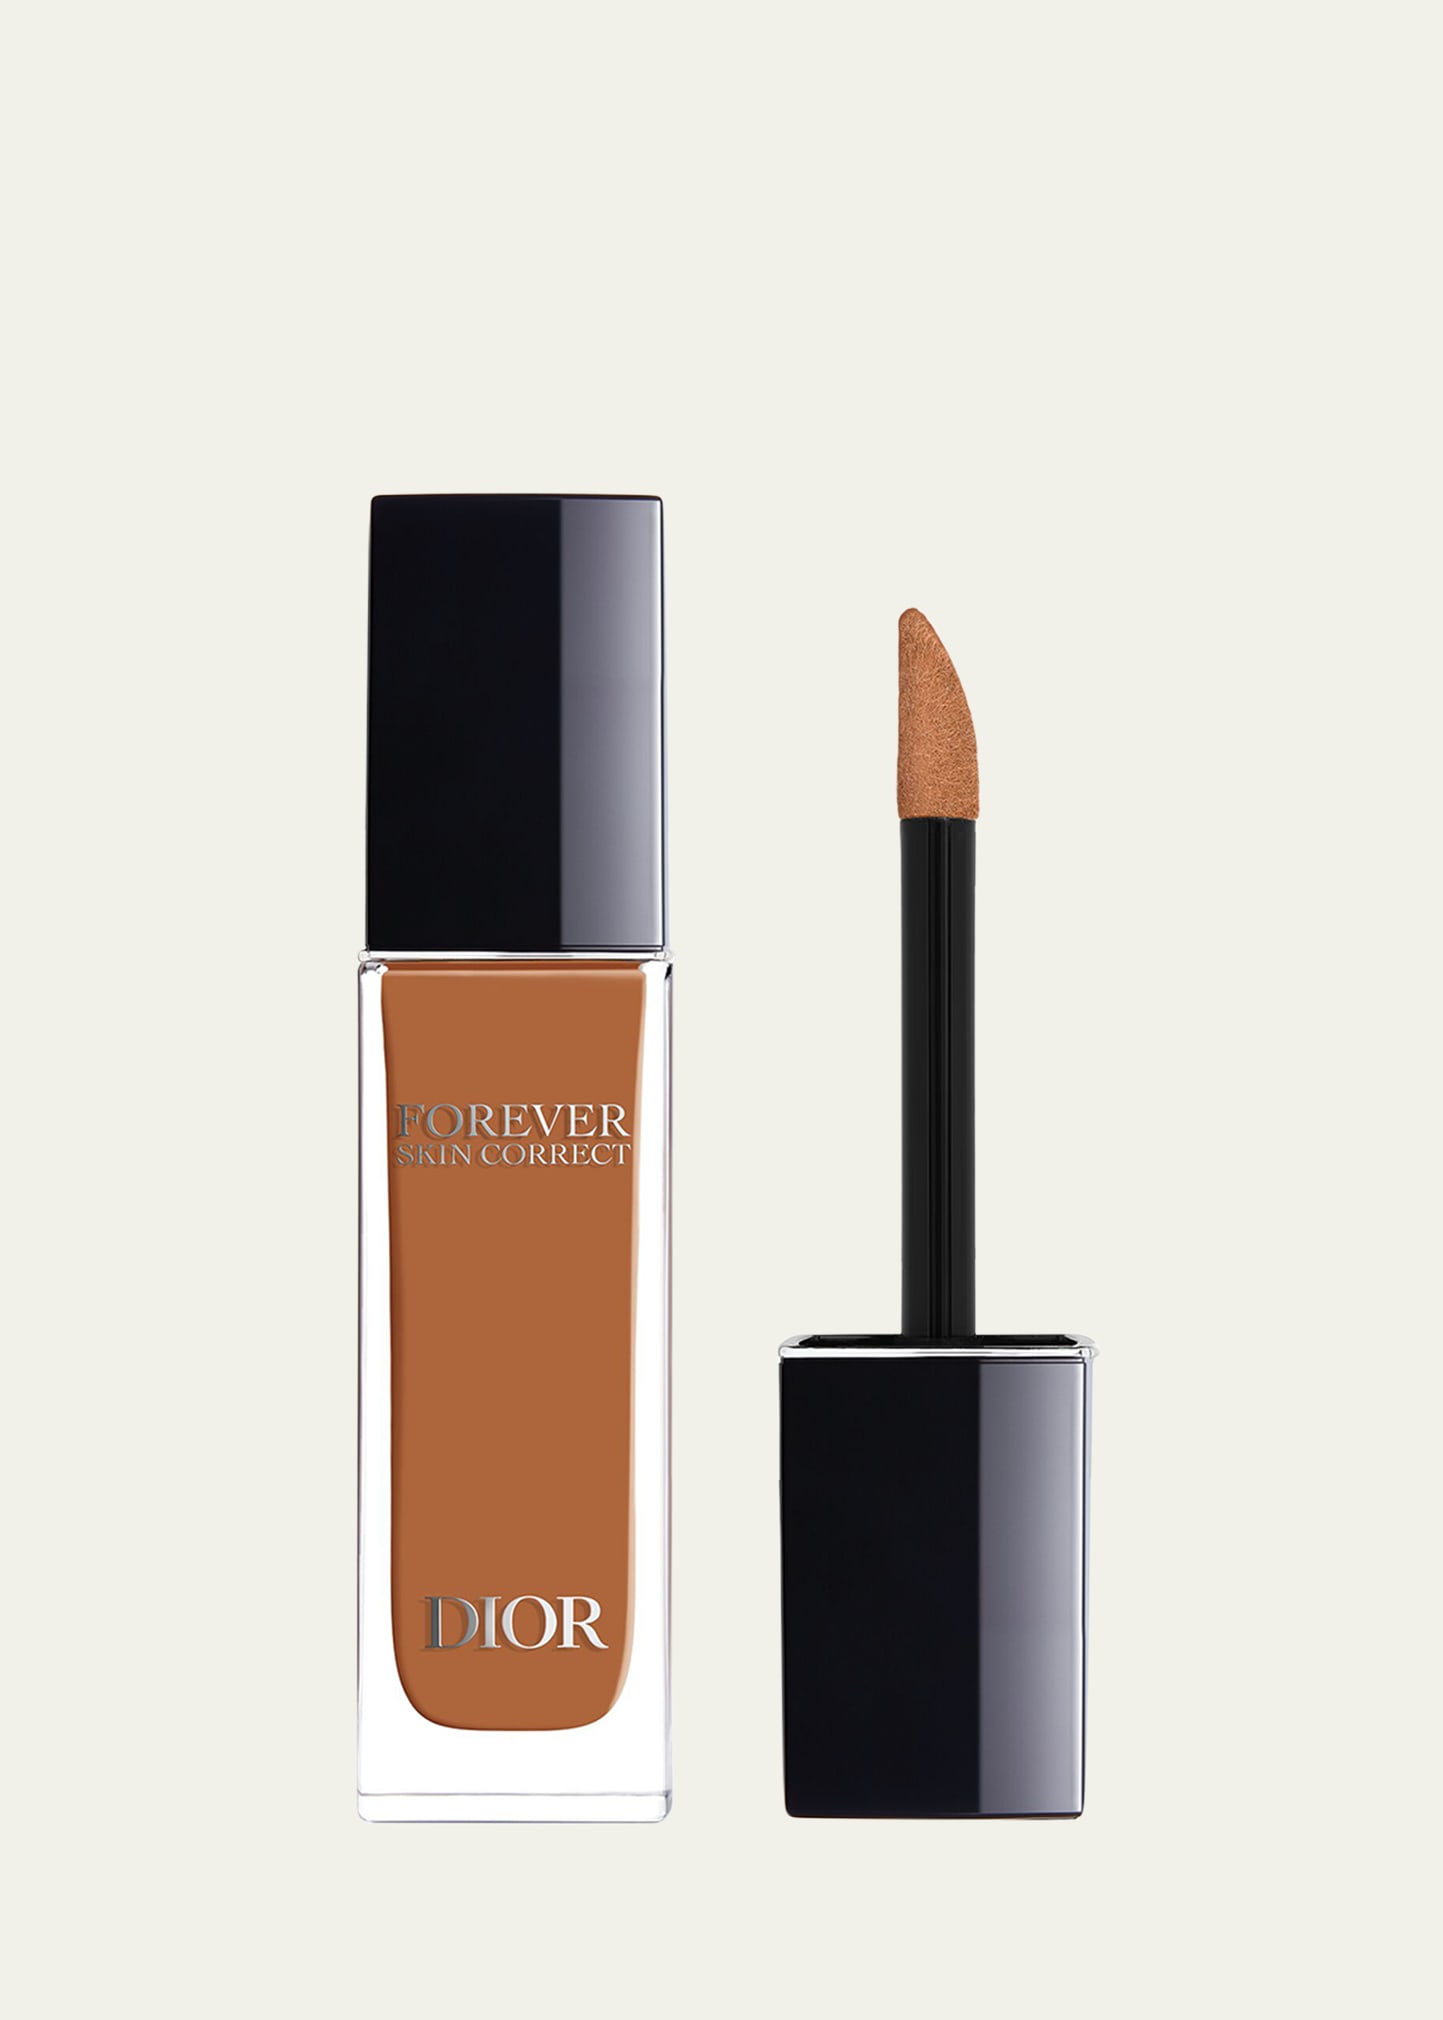 Dior Forever Skin Correct Full-coverage Concealer In 6 N Neutral